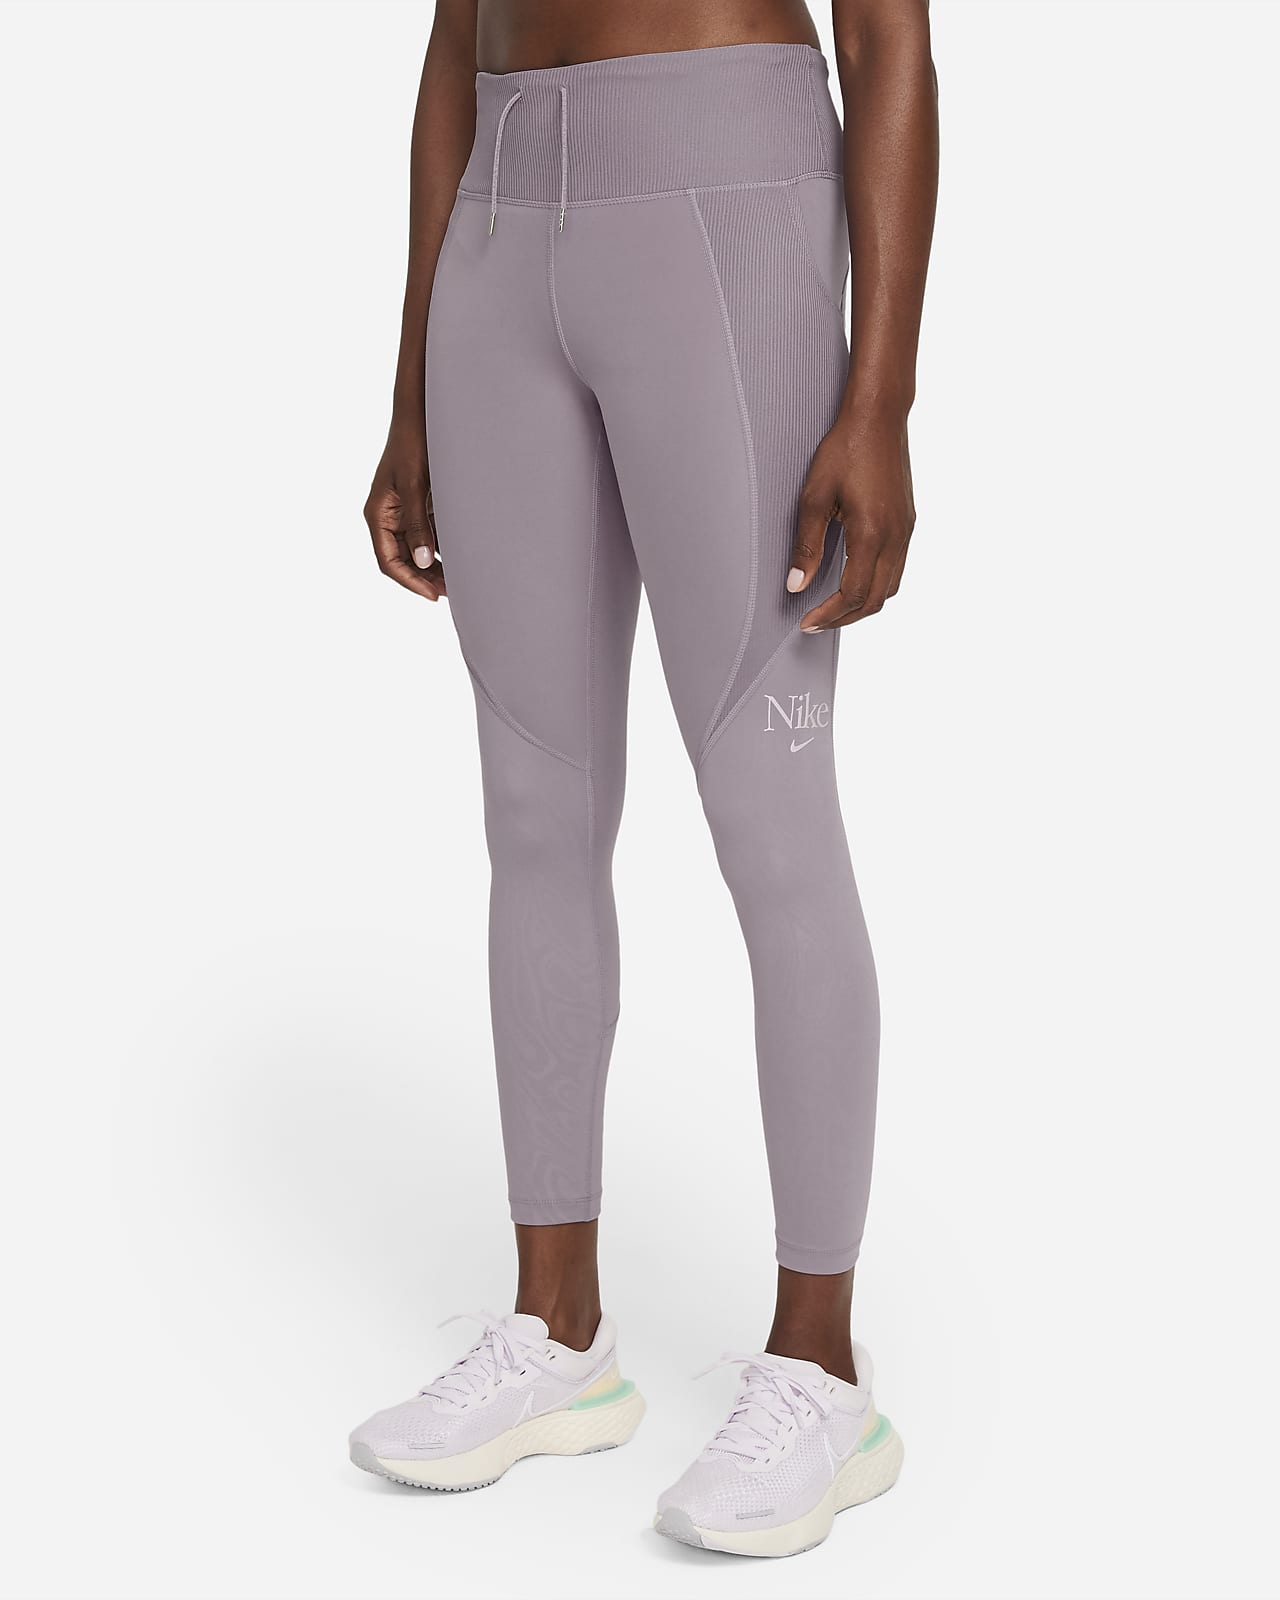 Buy Nike Women's Dri-FIT Fast Femme 7/8 Tights (Violet Haze/Venice, Size L)  Online